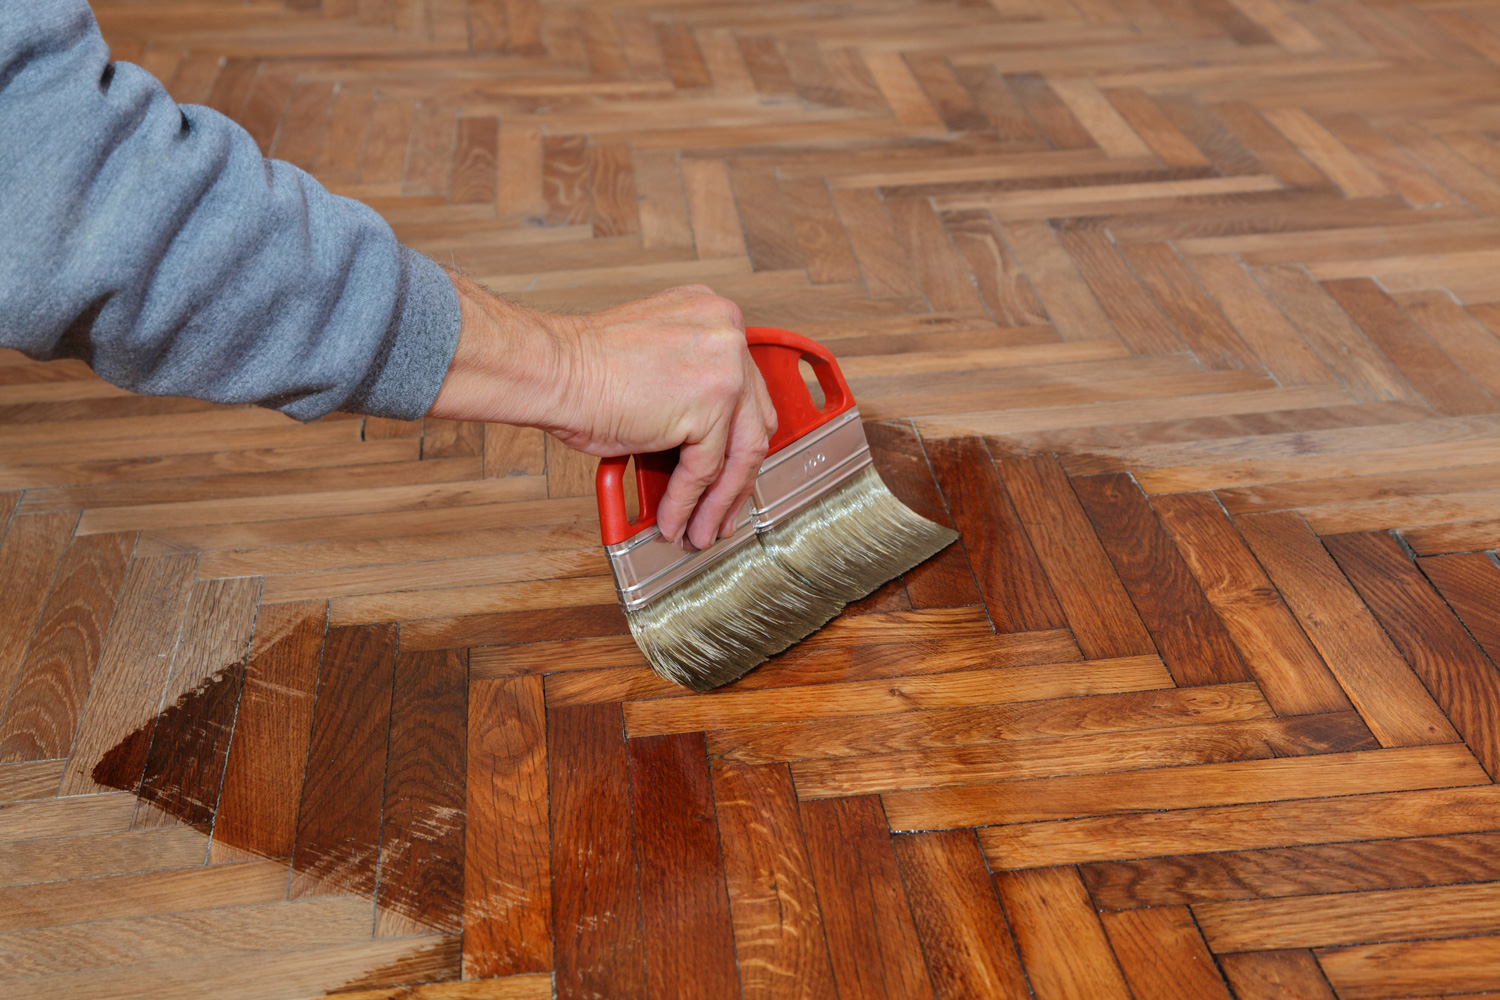 Varnishing of oak parquet floor, workers hand and brush